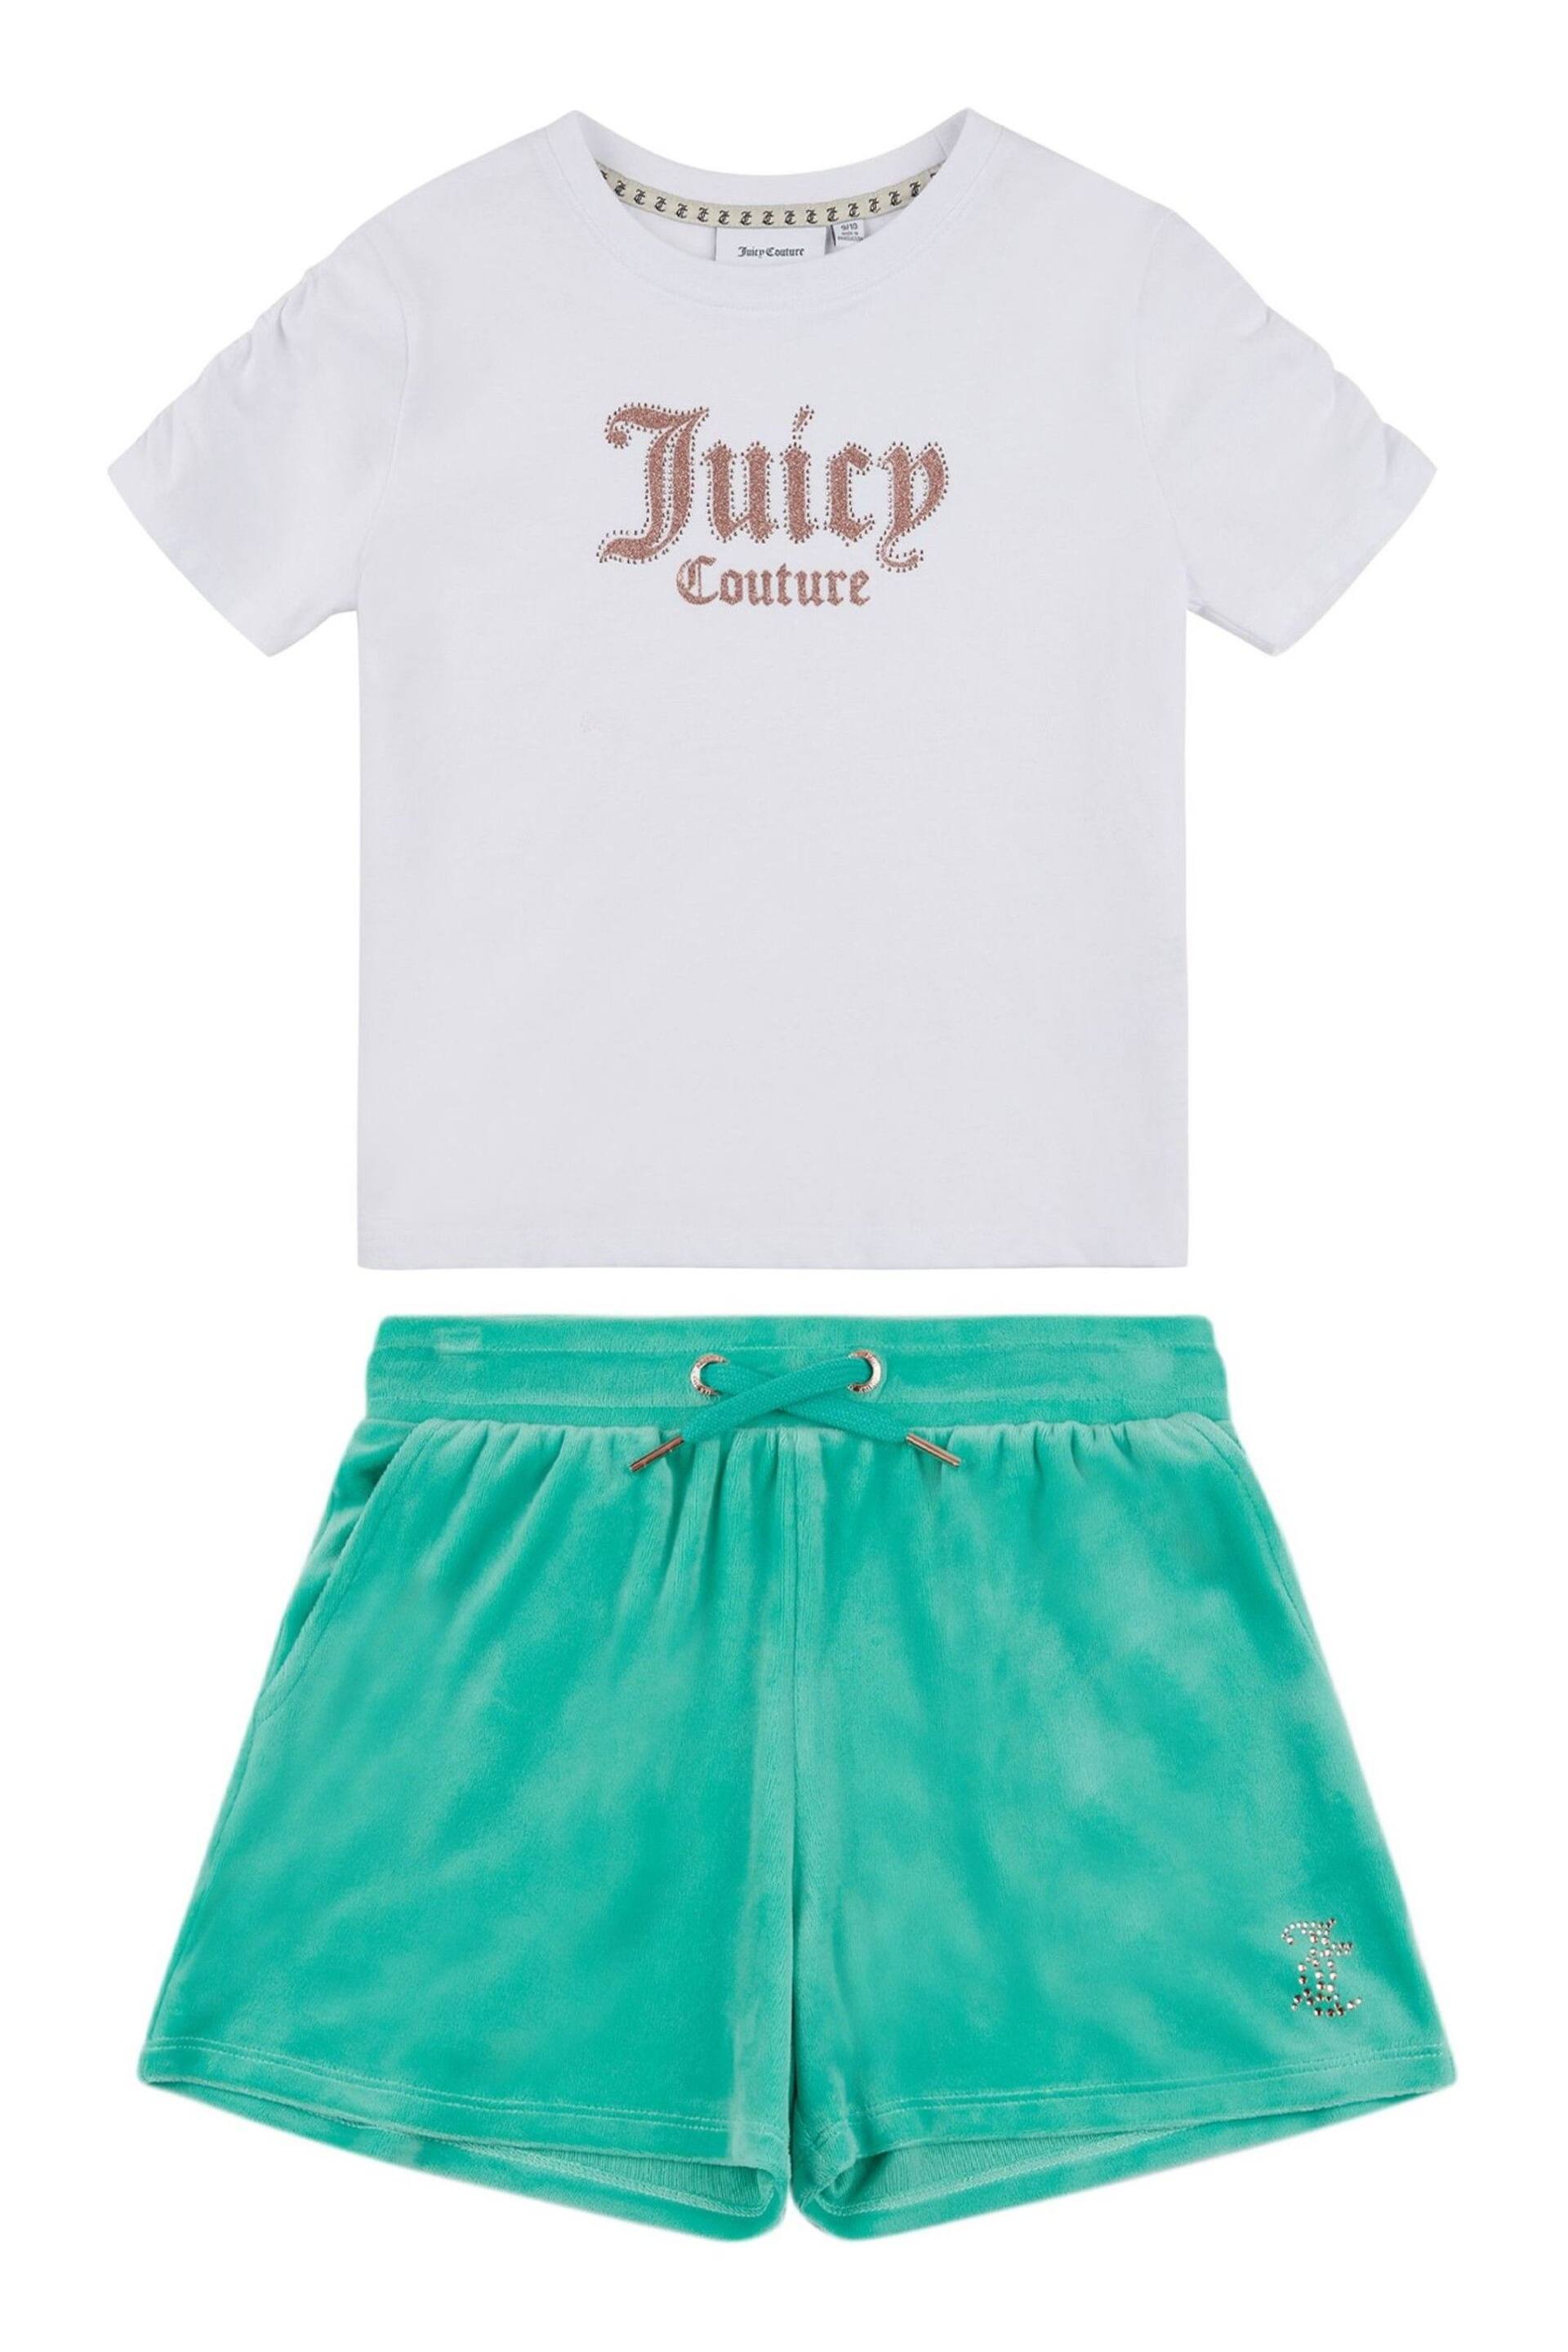 Juicy Couture Girls Pink Diamante T-Shirt & Shorts Set - Image 1 of 4